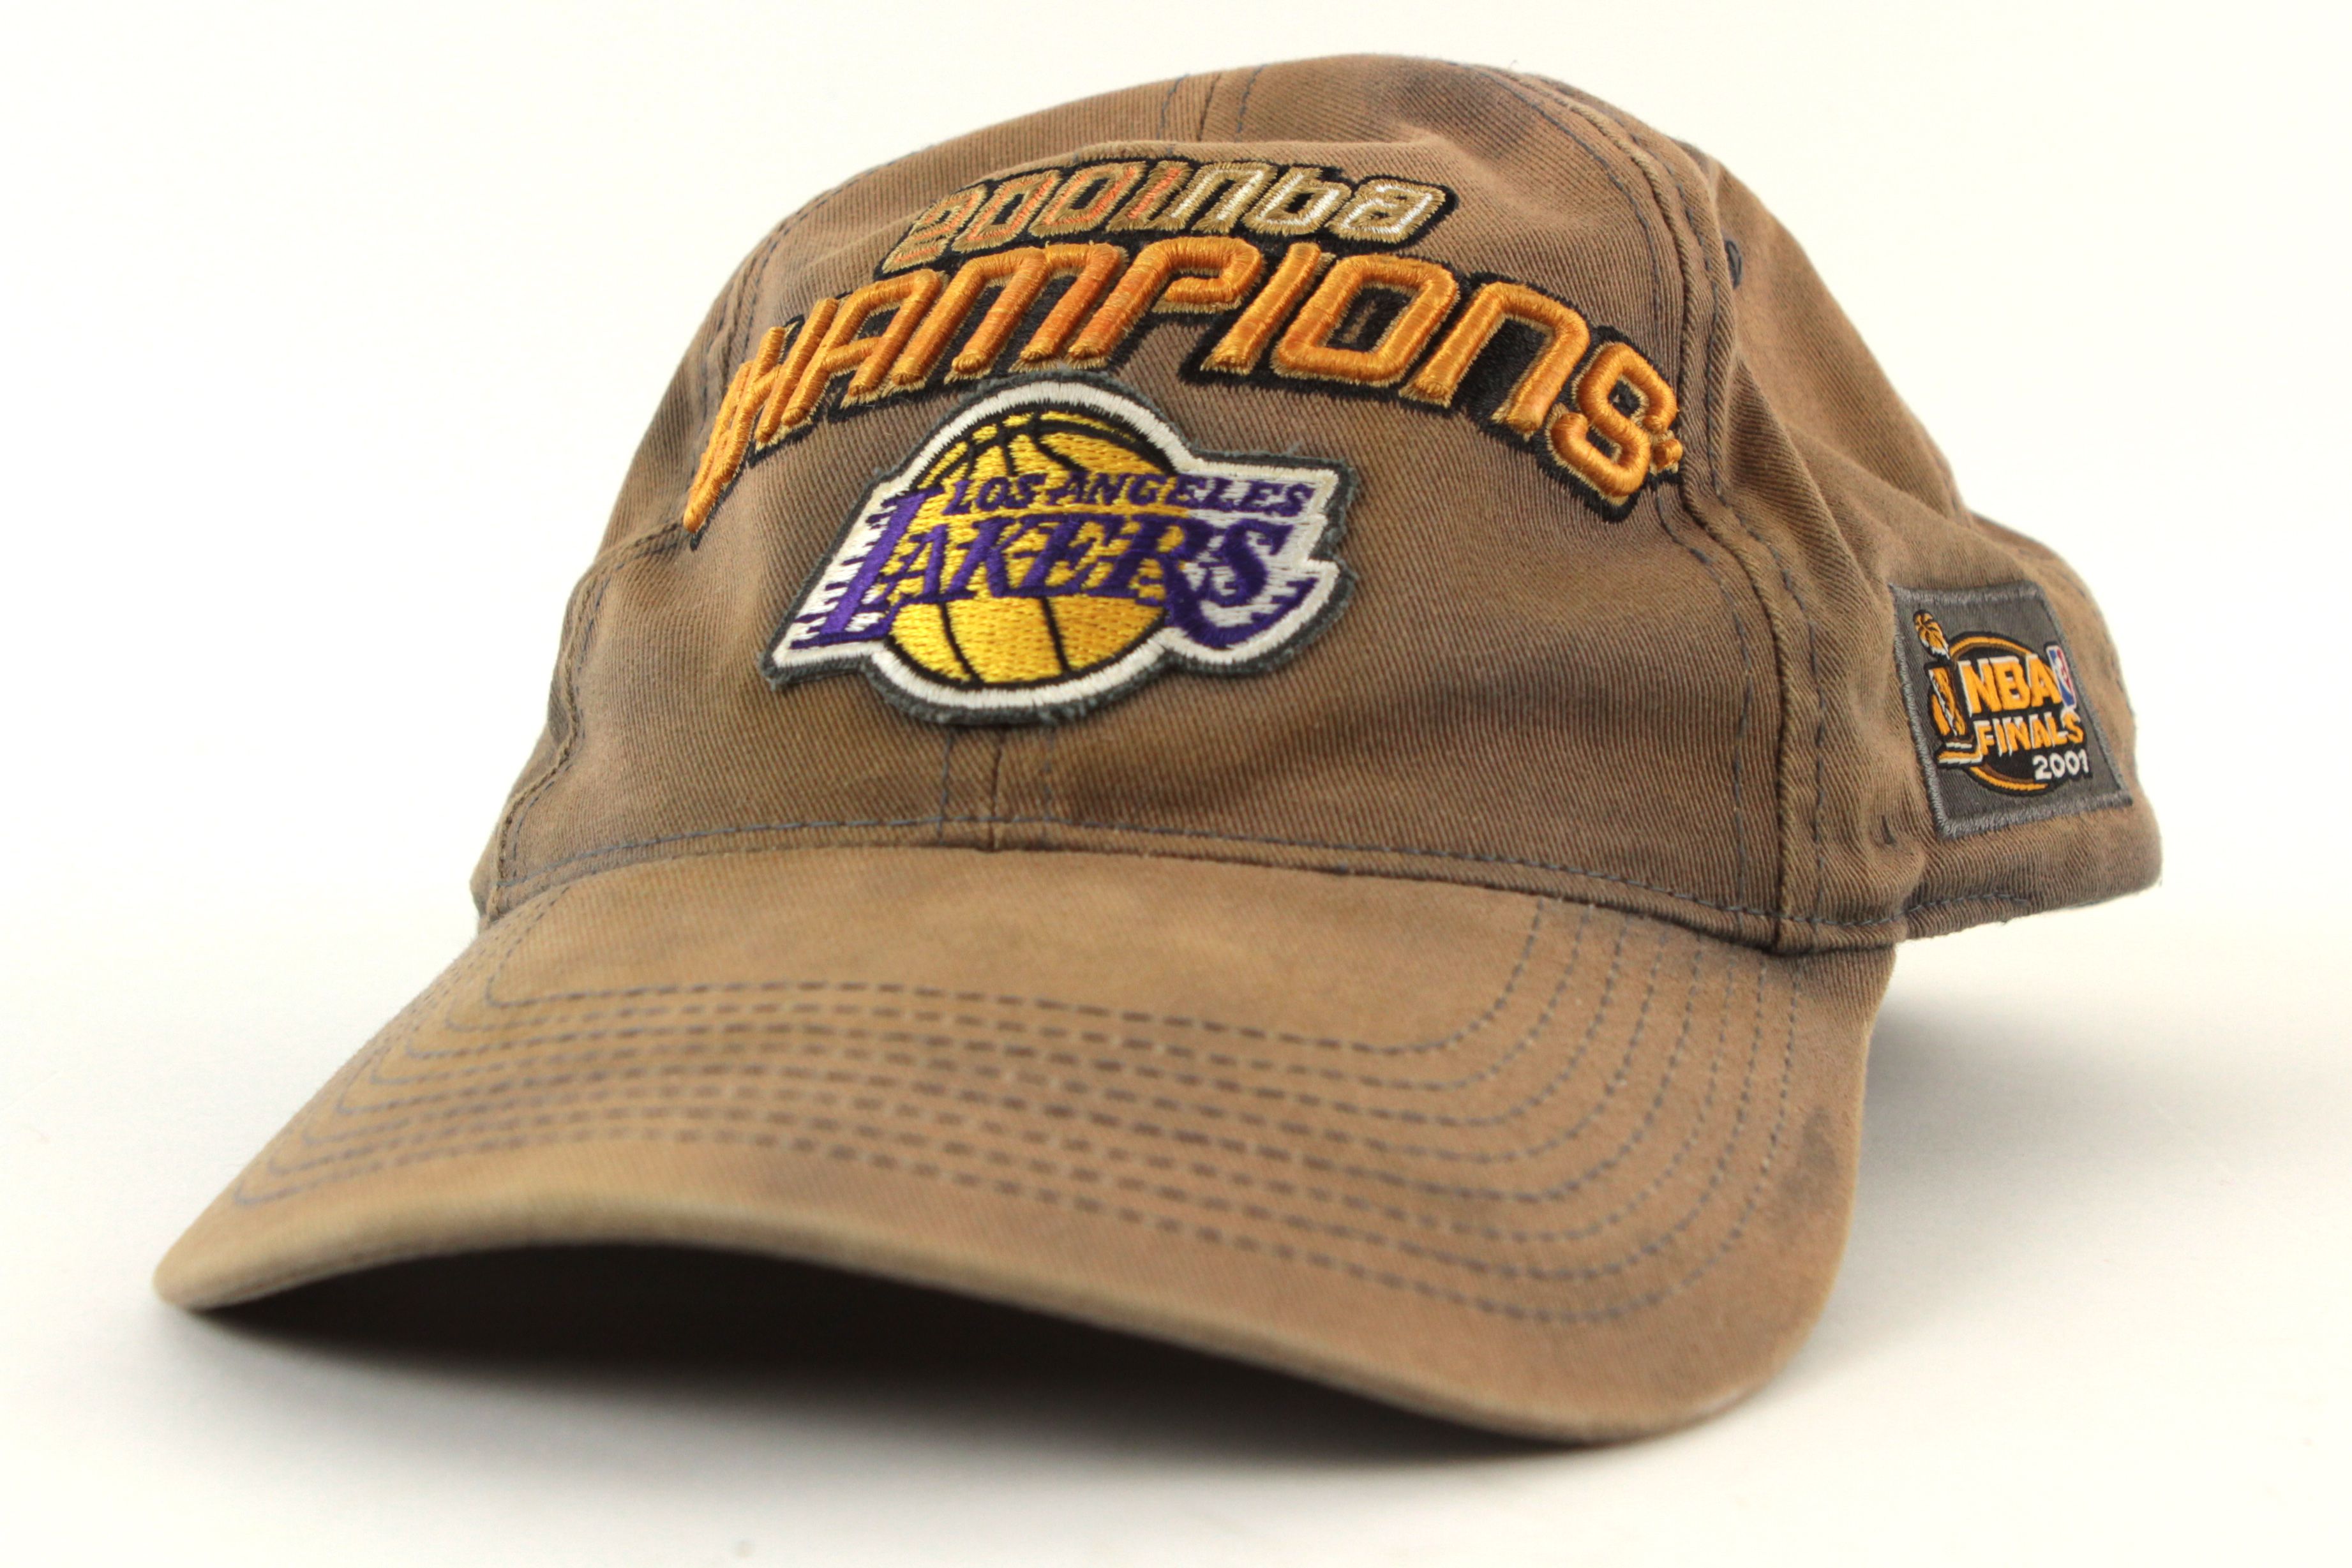 lakers championship hat